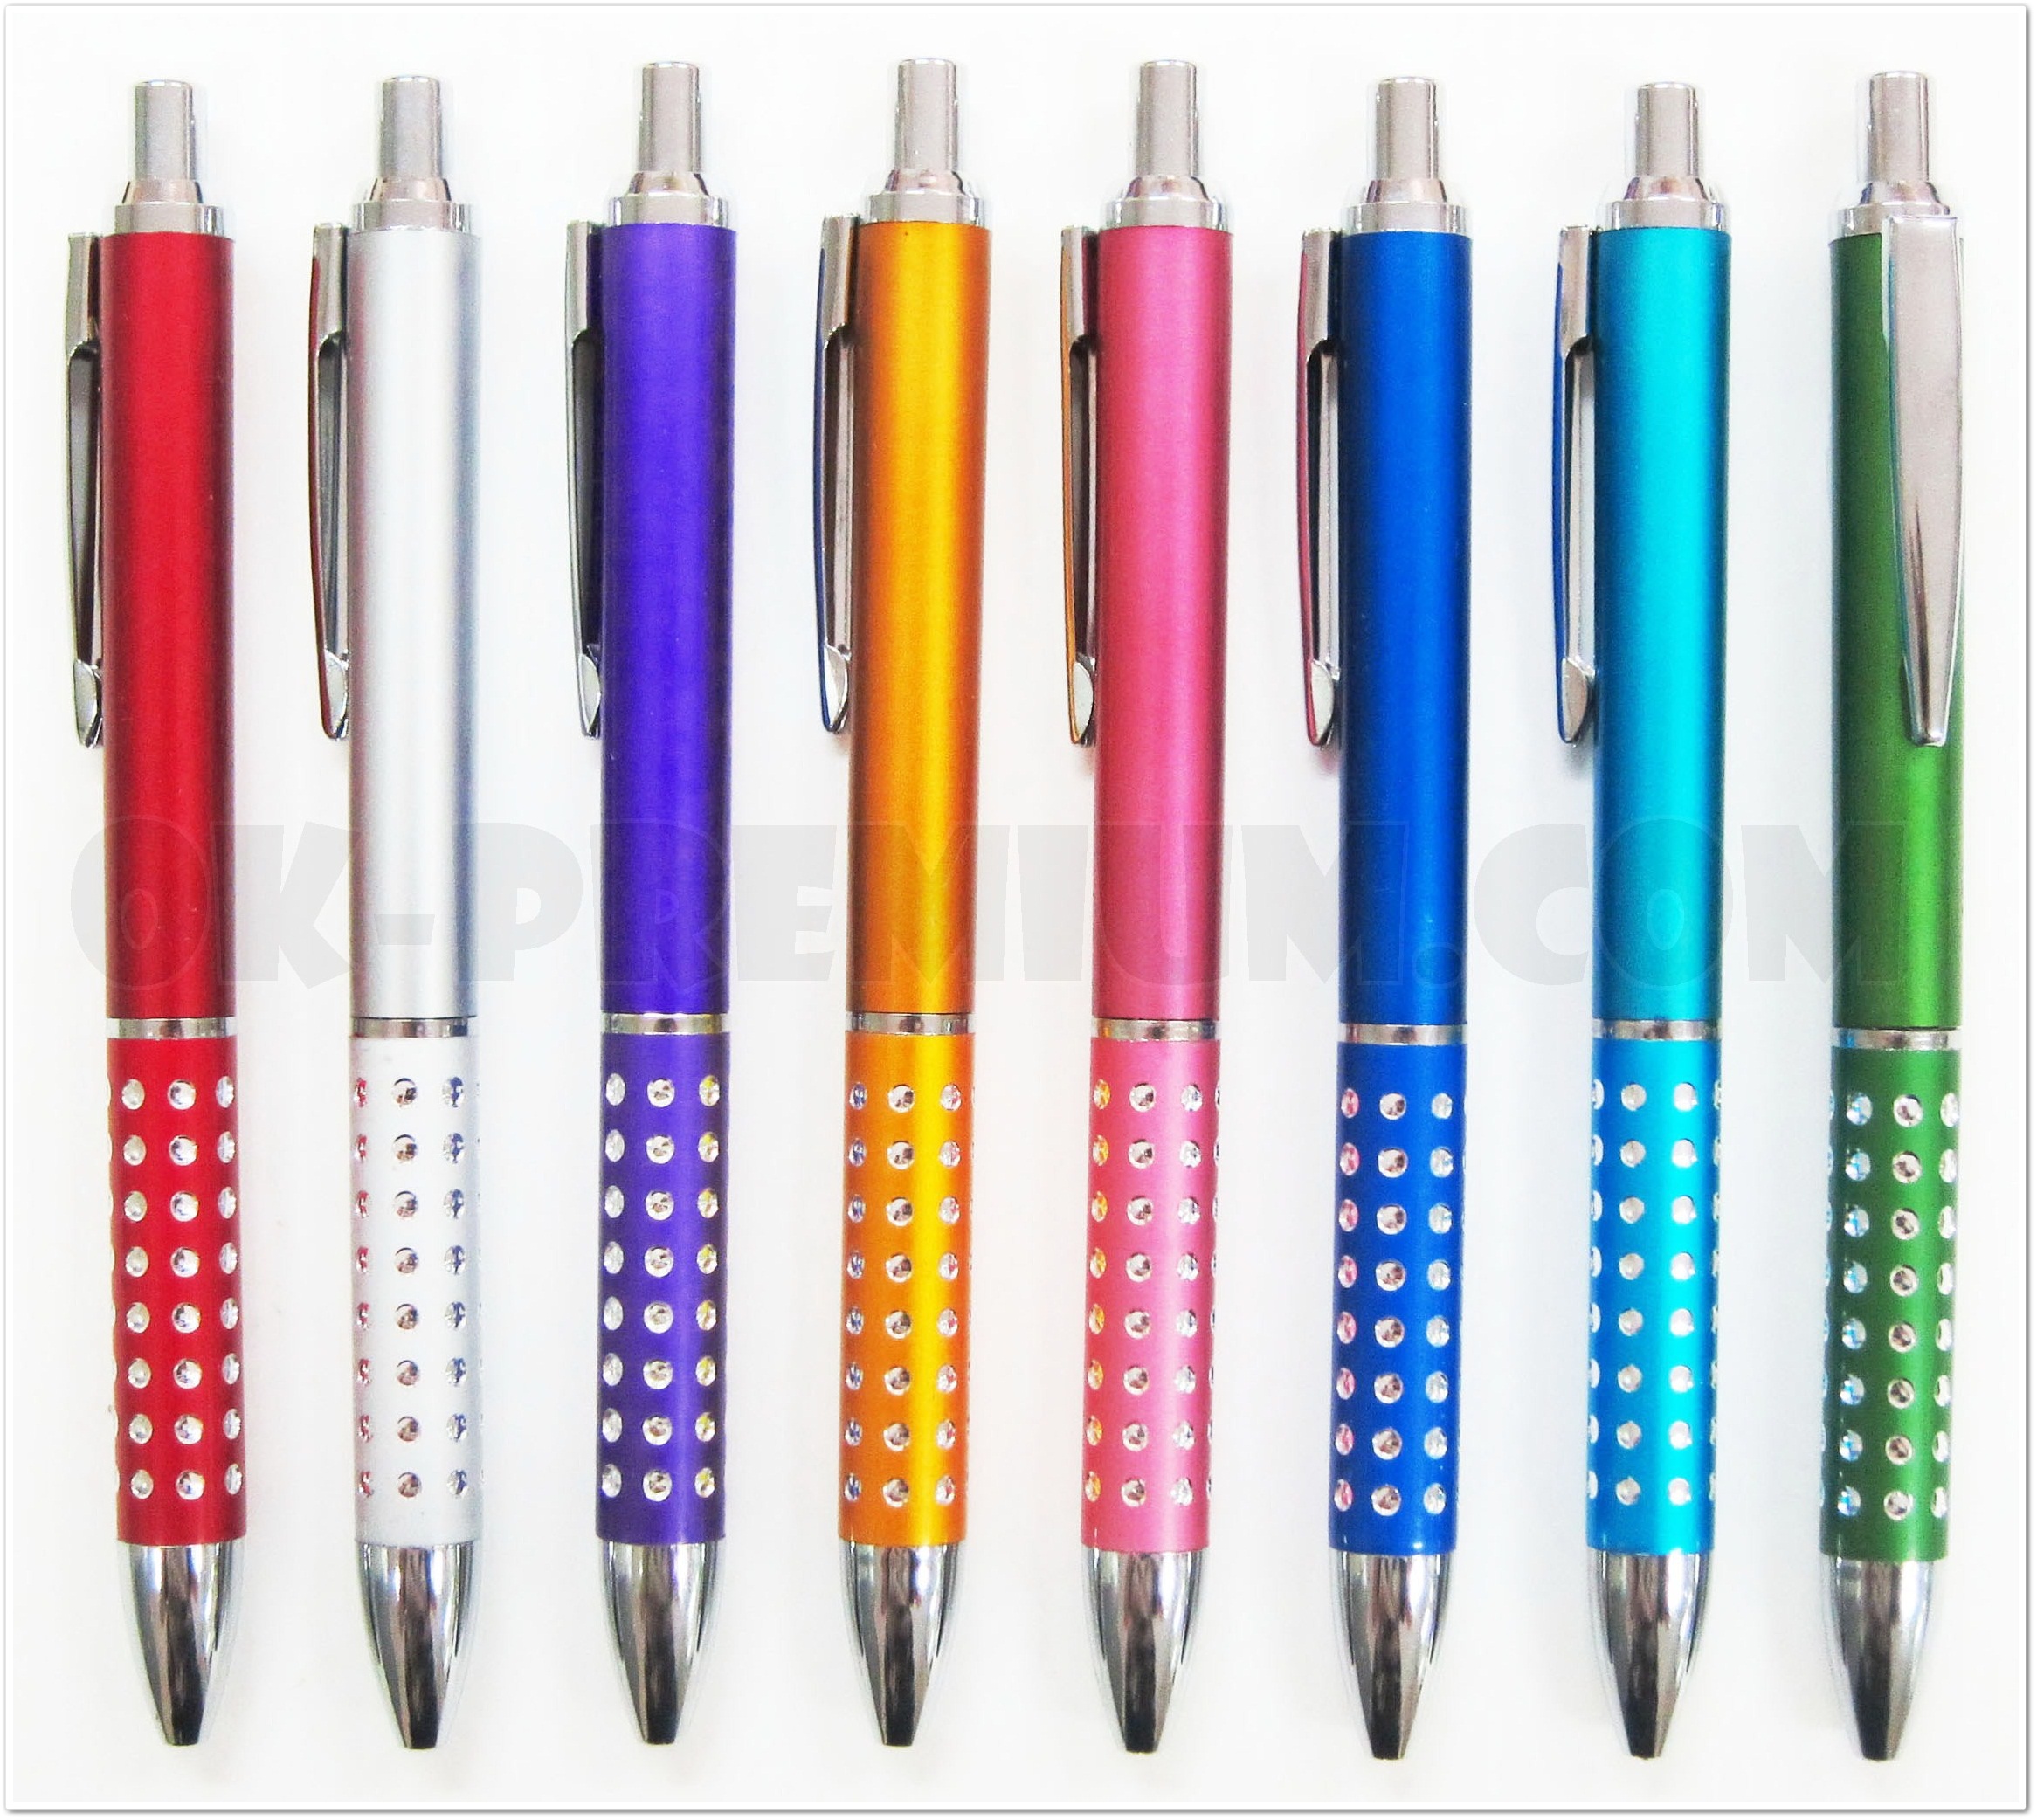 P257 ปากกาพลาสติก ปากกาดูดี ปากกา ปากกาพรีเมี่ยม ปากกาคล้องคอ พร้อมสกรีน สกรีนฟรี ของพรีเมี่ยม สินค้าพรีเมี่ยม ของนำเข้า สินค้านำเข้า ของแจก ของแถม ของชำร่วย มีให้เลือกหลายแบบค่ะ